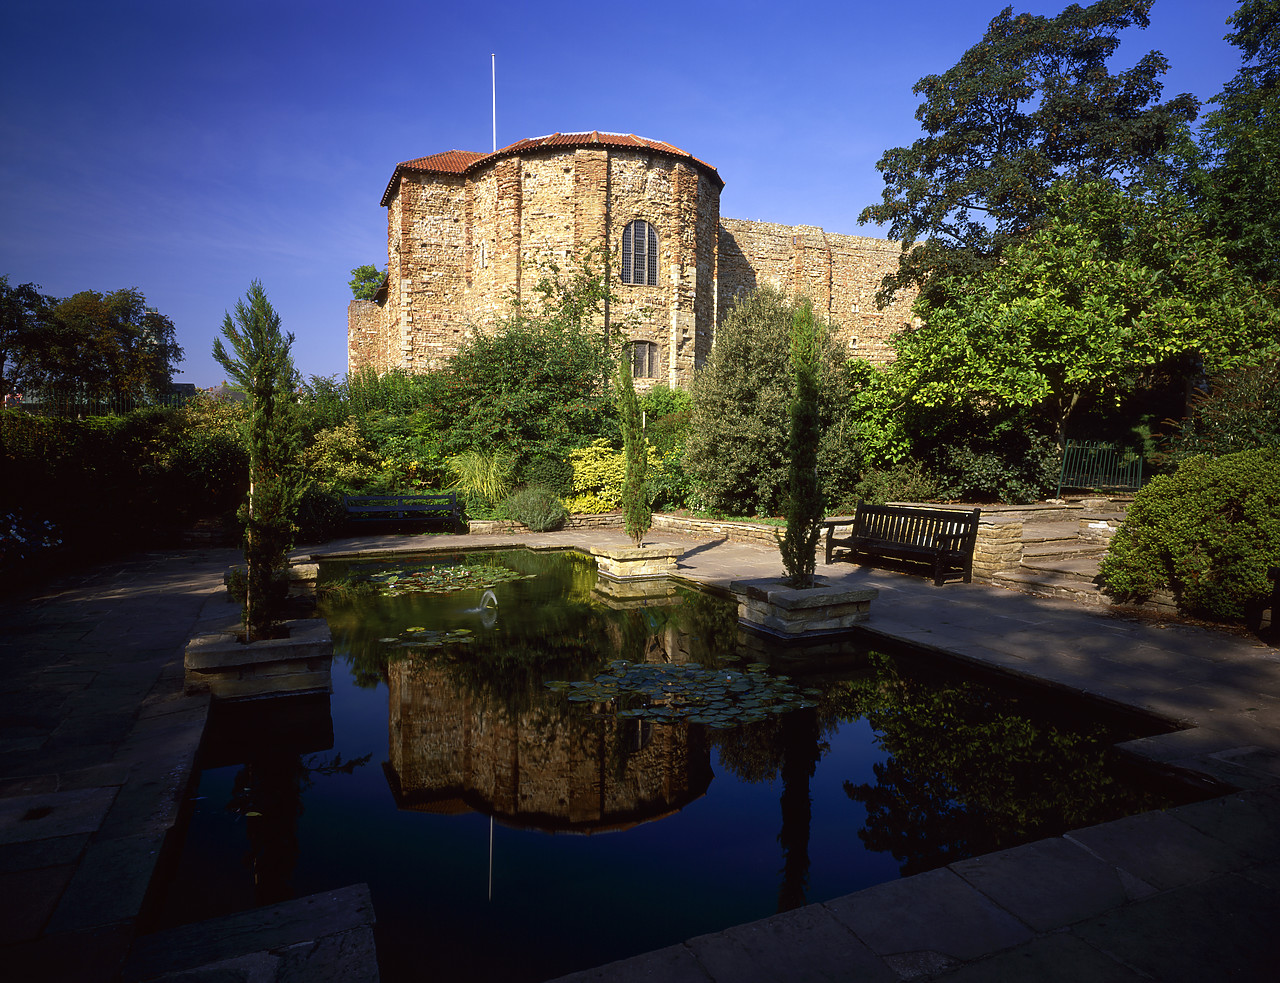 #966163-1 - Colchester Castle, Essex, England